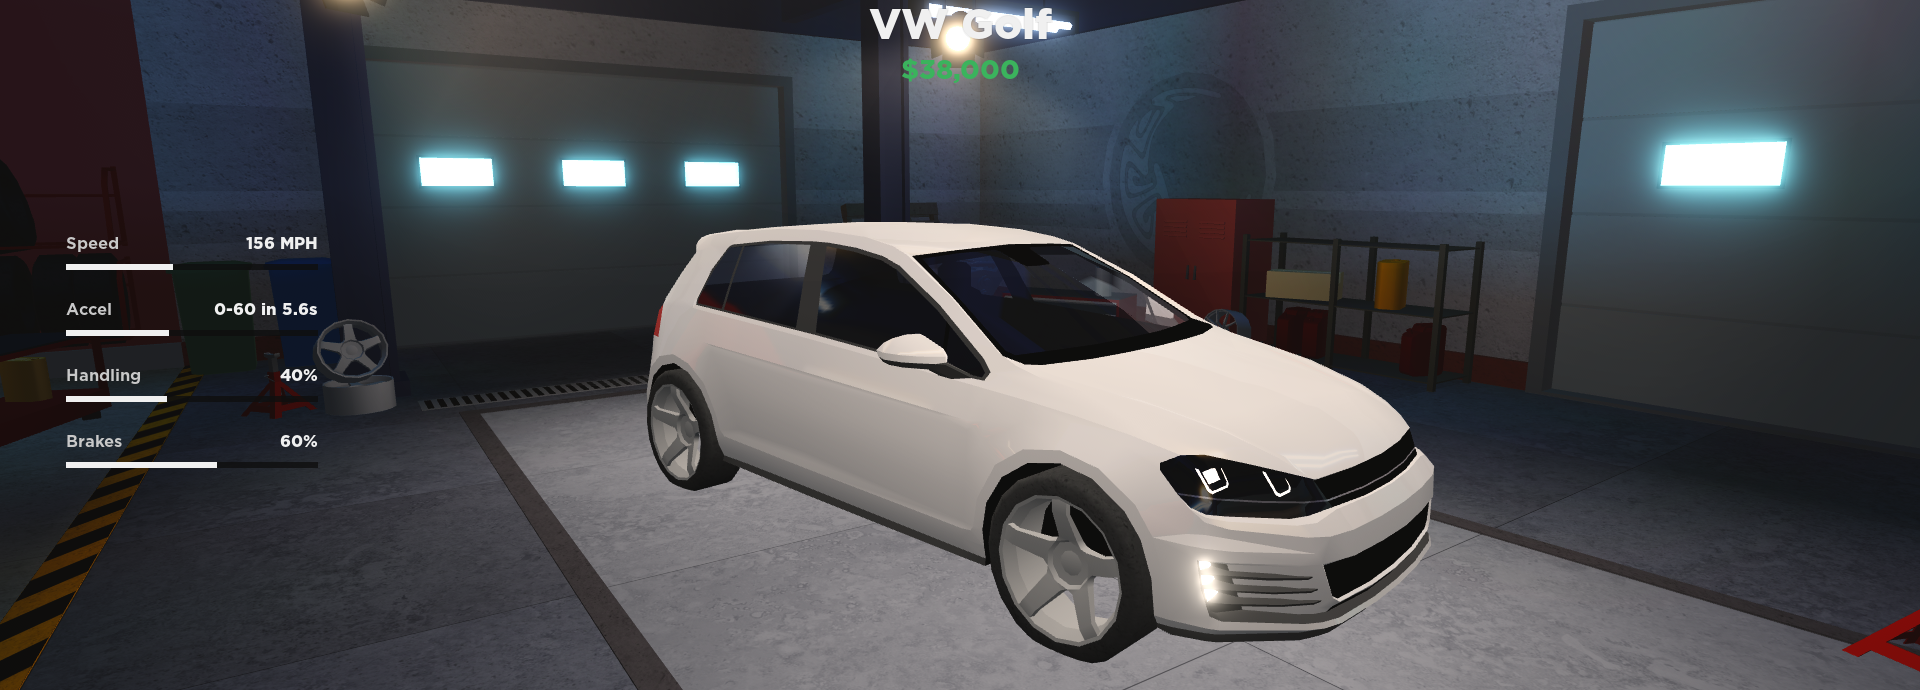 2020 Volkswagen Golf 7 GTI : r/CarParkingMultiplayer